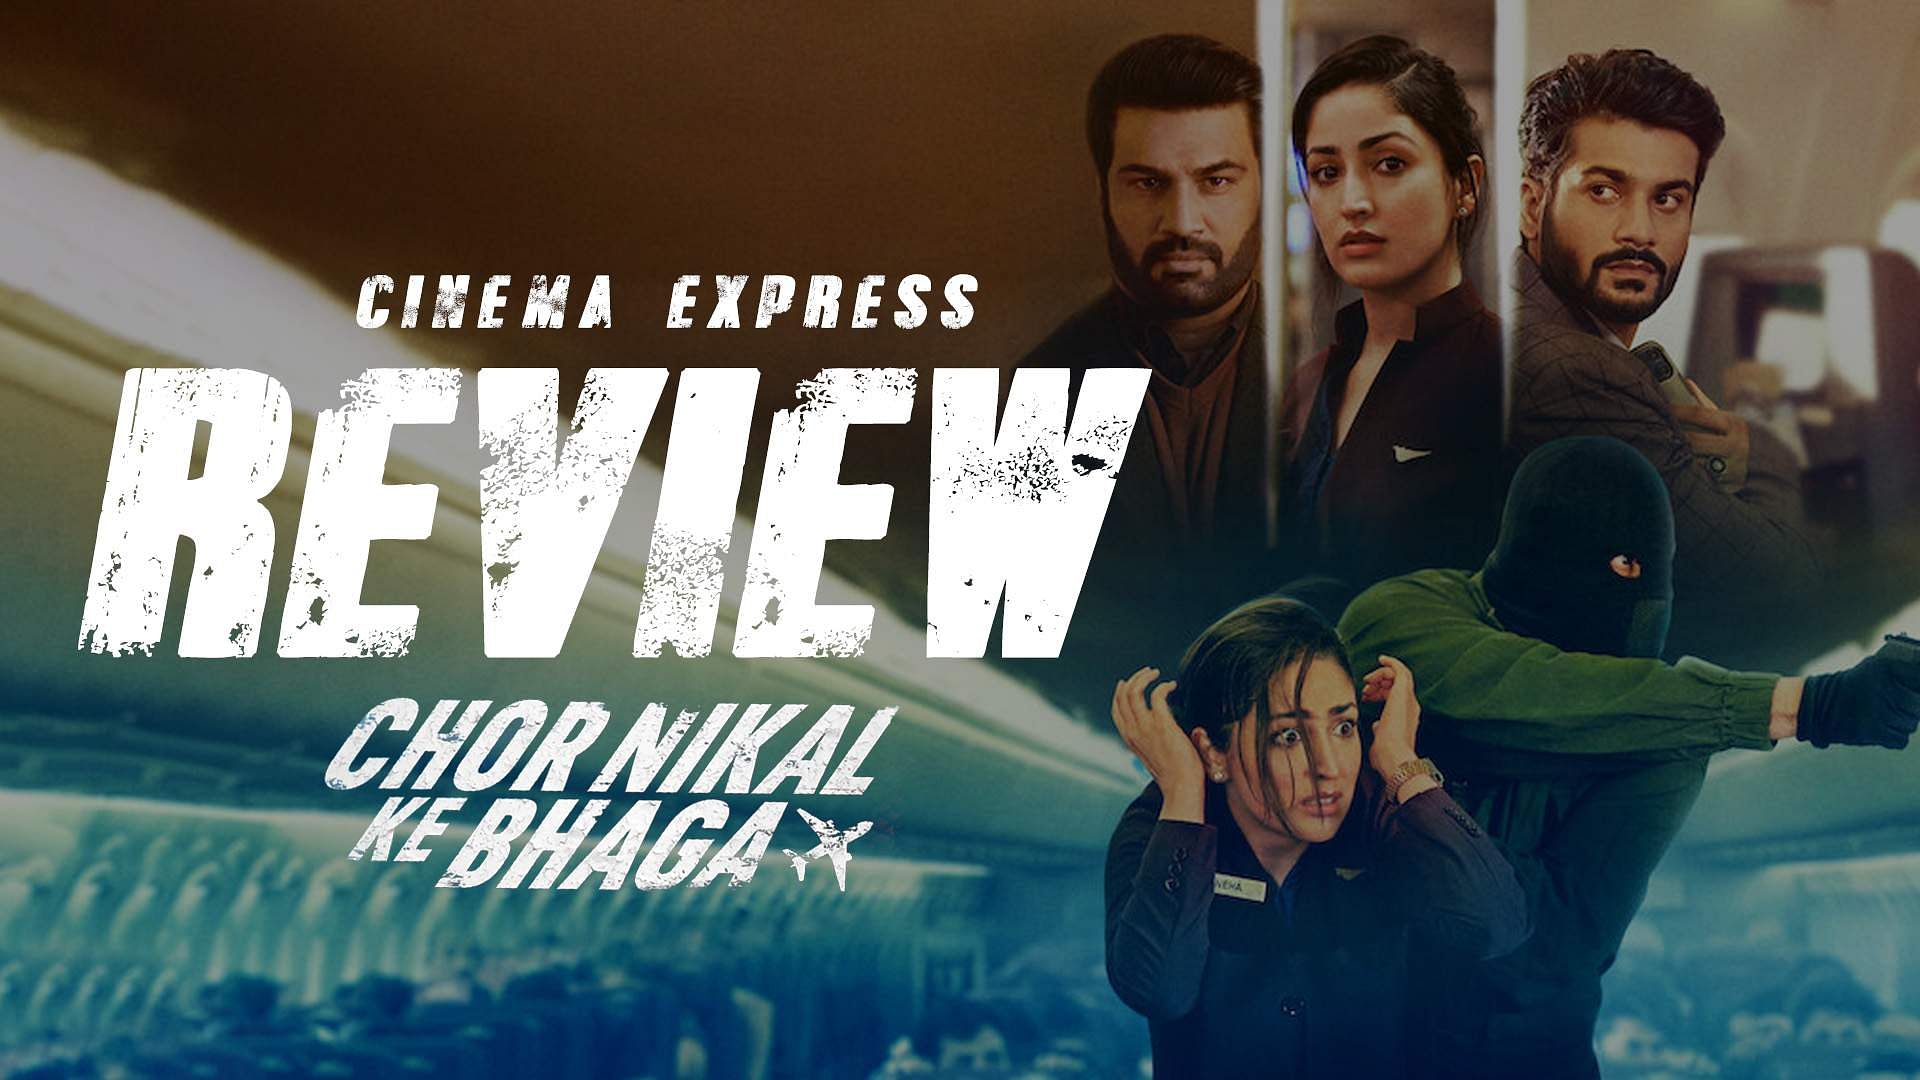 Chor Nikal Ke Bhaga Movie Review: Yami Gautam, Sunny Kaushal Have Fun In A Campy And Self Aware Ride Cinema Express